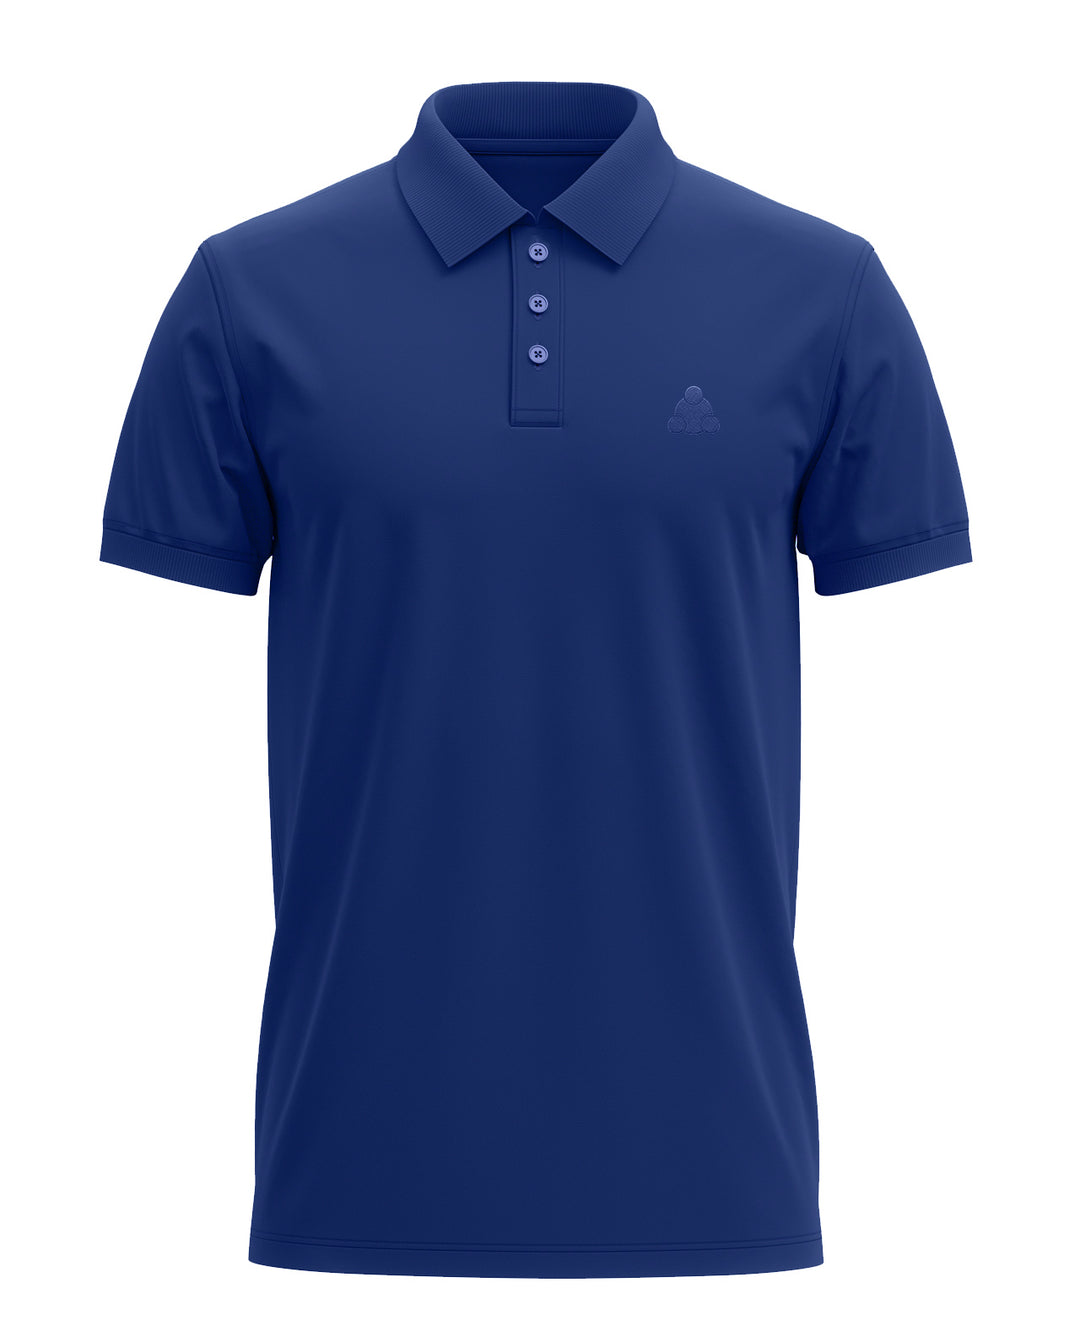 Trinizen Basics Polo T-shirt Embroidered Logo - Navy Blue